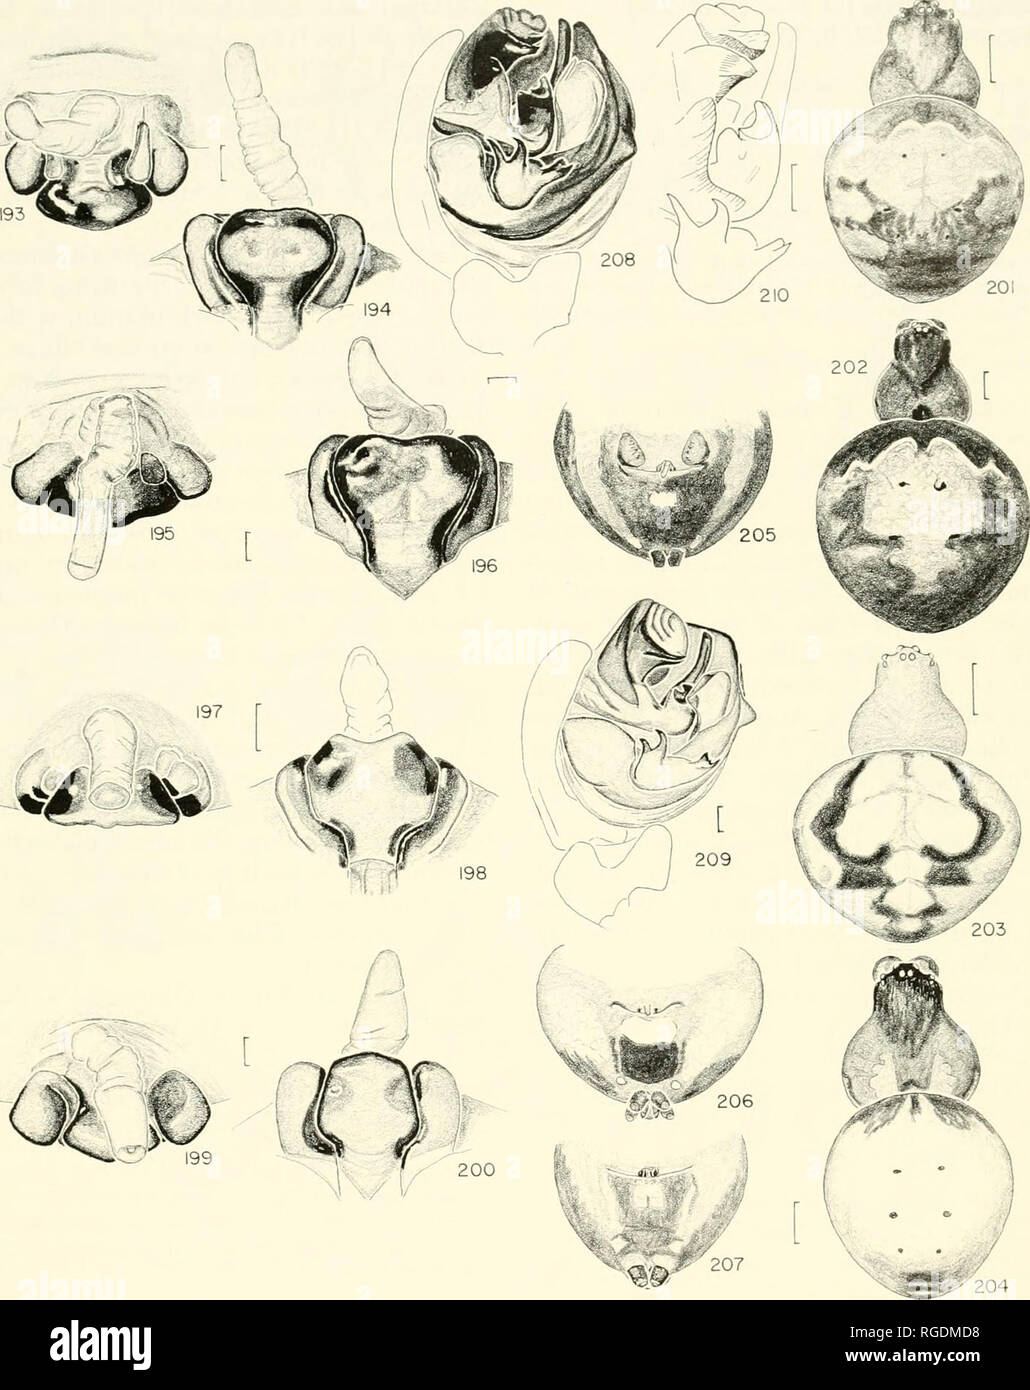 . Bulletin of the Museum of Comparative Zoology at Harvard College. Zoology. Neotropical Araneus, Dubiepeira, Aculepeira • Levi 233. &lt; mF 207 Figures 193-210. Araneus expletus{0. P.-Cambridge). 193-207. Female. 193, 195, 197, 199. Epigynum, ventral. 194, 196, 198, 200. Epigynum, posterior. 201-204. Dorsal. 205-207. Abdomen, ventral. 208-210. Male, left palpus. 208, 209. Mesal. 210. Median apophysis, embolus, subterminal and terminal apophyses. 193, 194, 201 (type of A. expletus, Guatemala). 195, 196, 202, 205 (holotype of A. smithi, Veracruz, Mexico). 197,198, 203, 206, 209 (Veracruz, Mexic Stock Photo